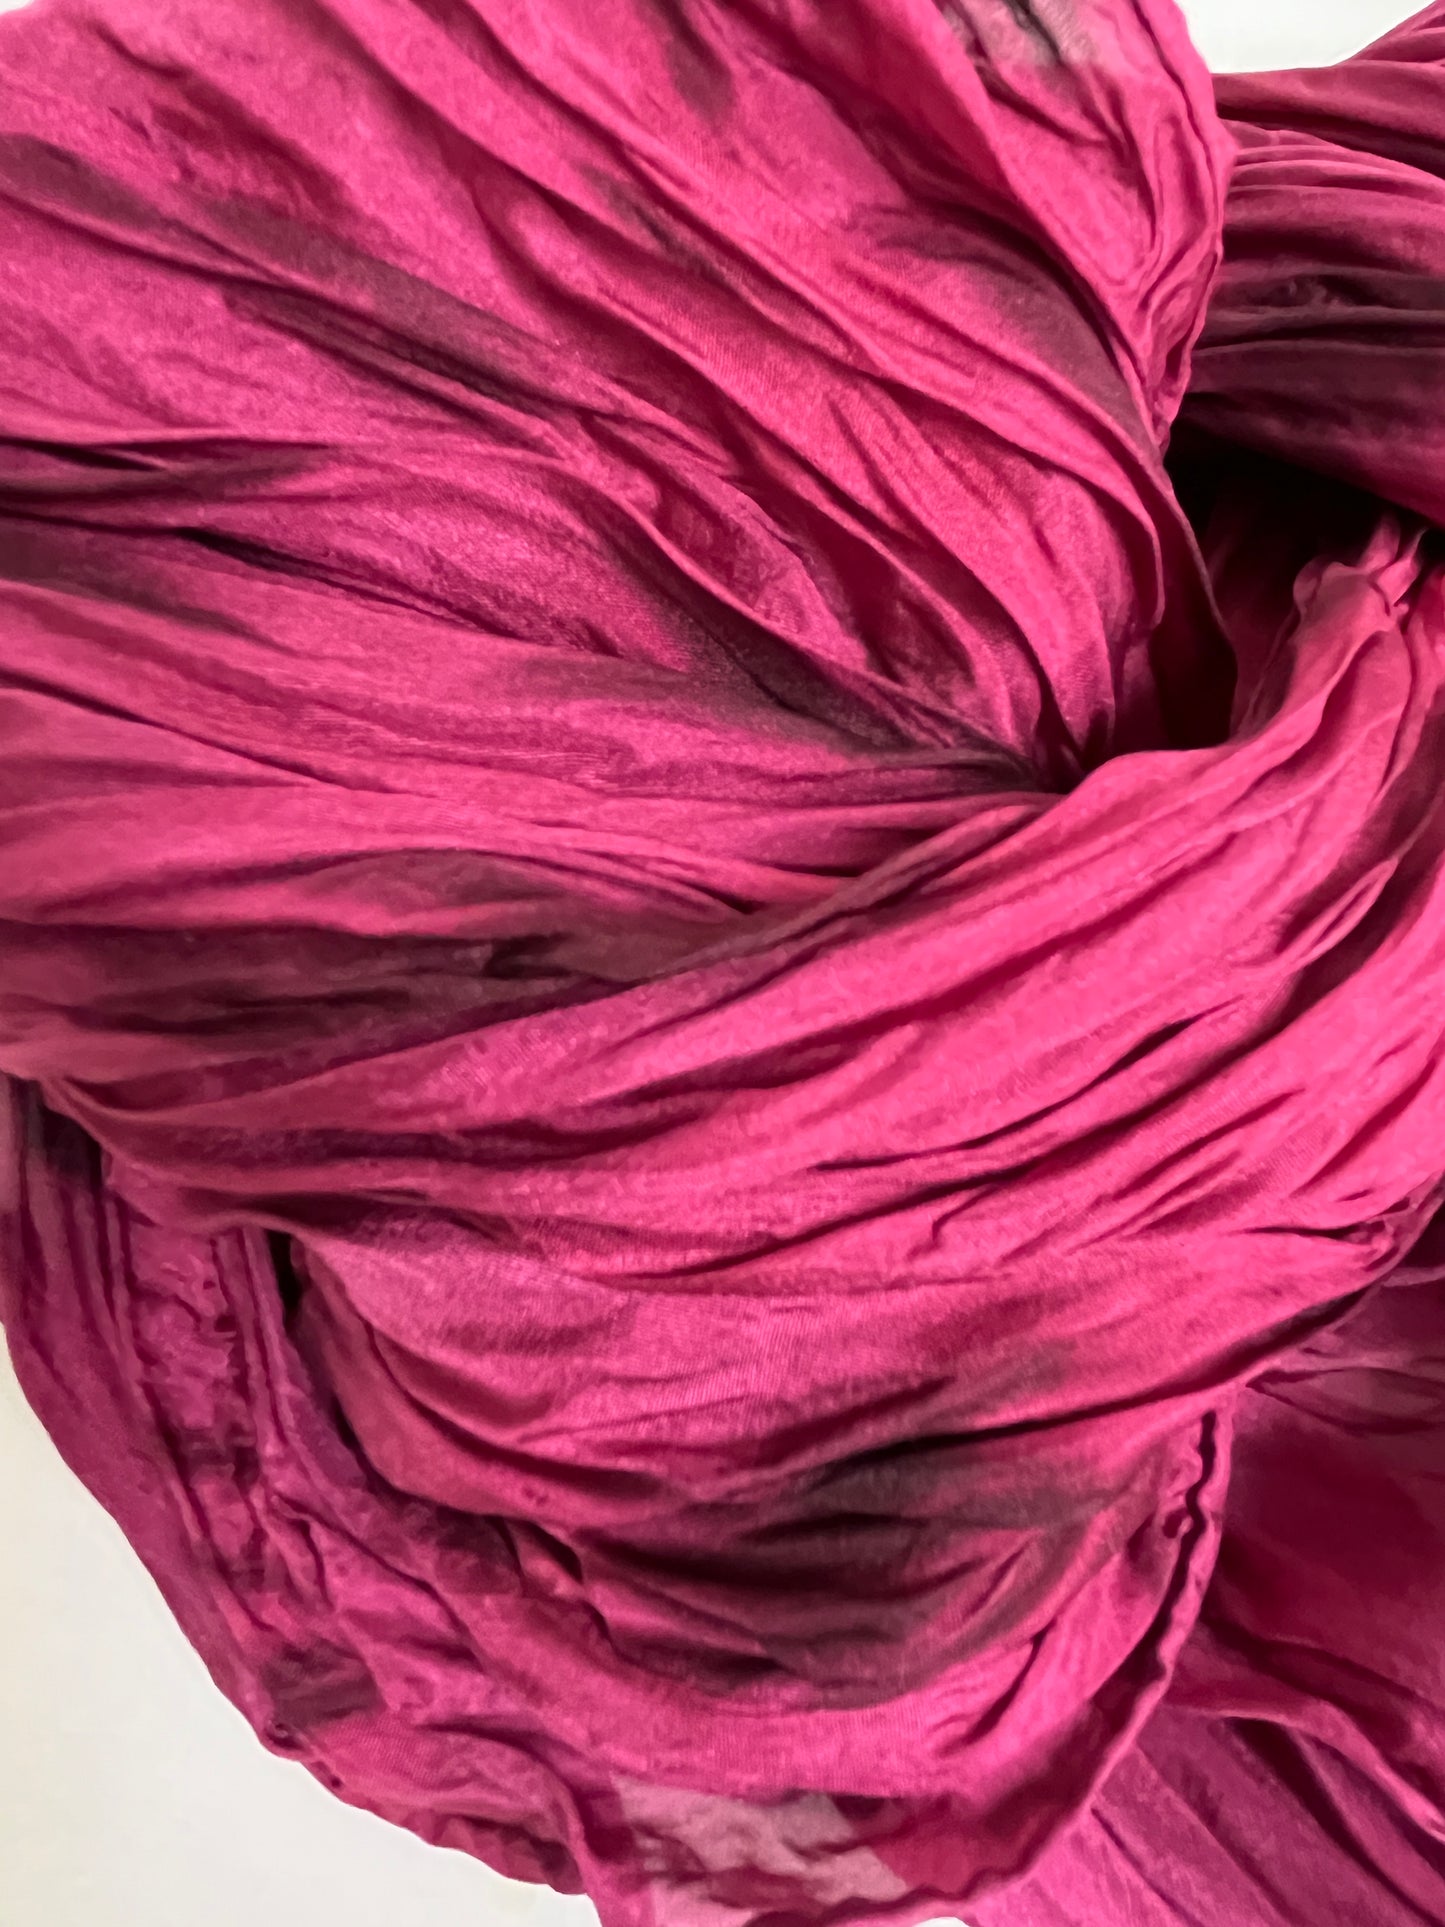 The “Activity Scarf” Dark Rose - hand-dyed silk scarf - $125